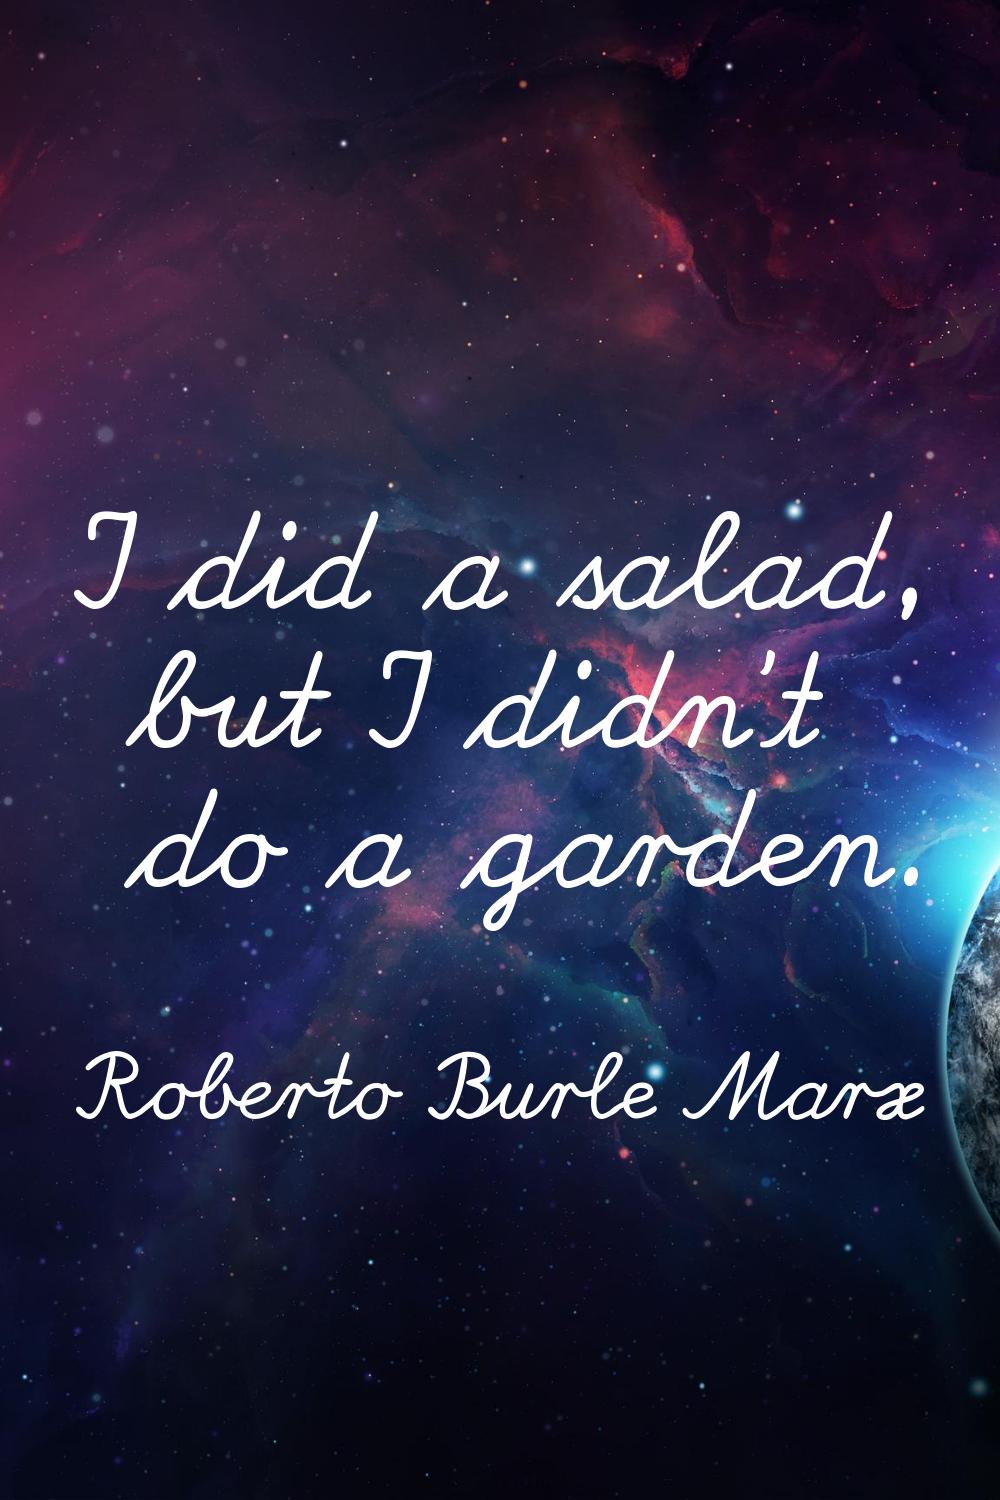 I did a salad, but I didn't do a garden.